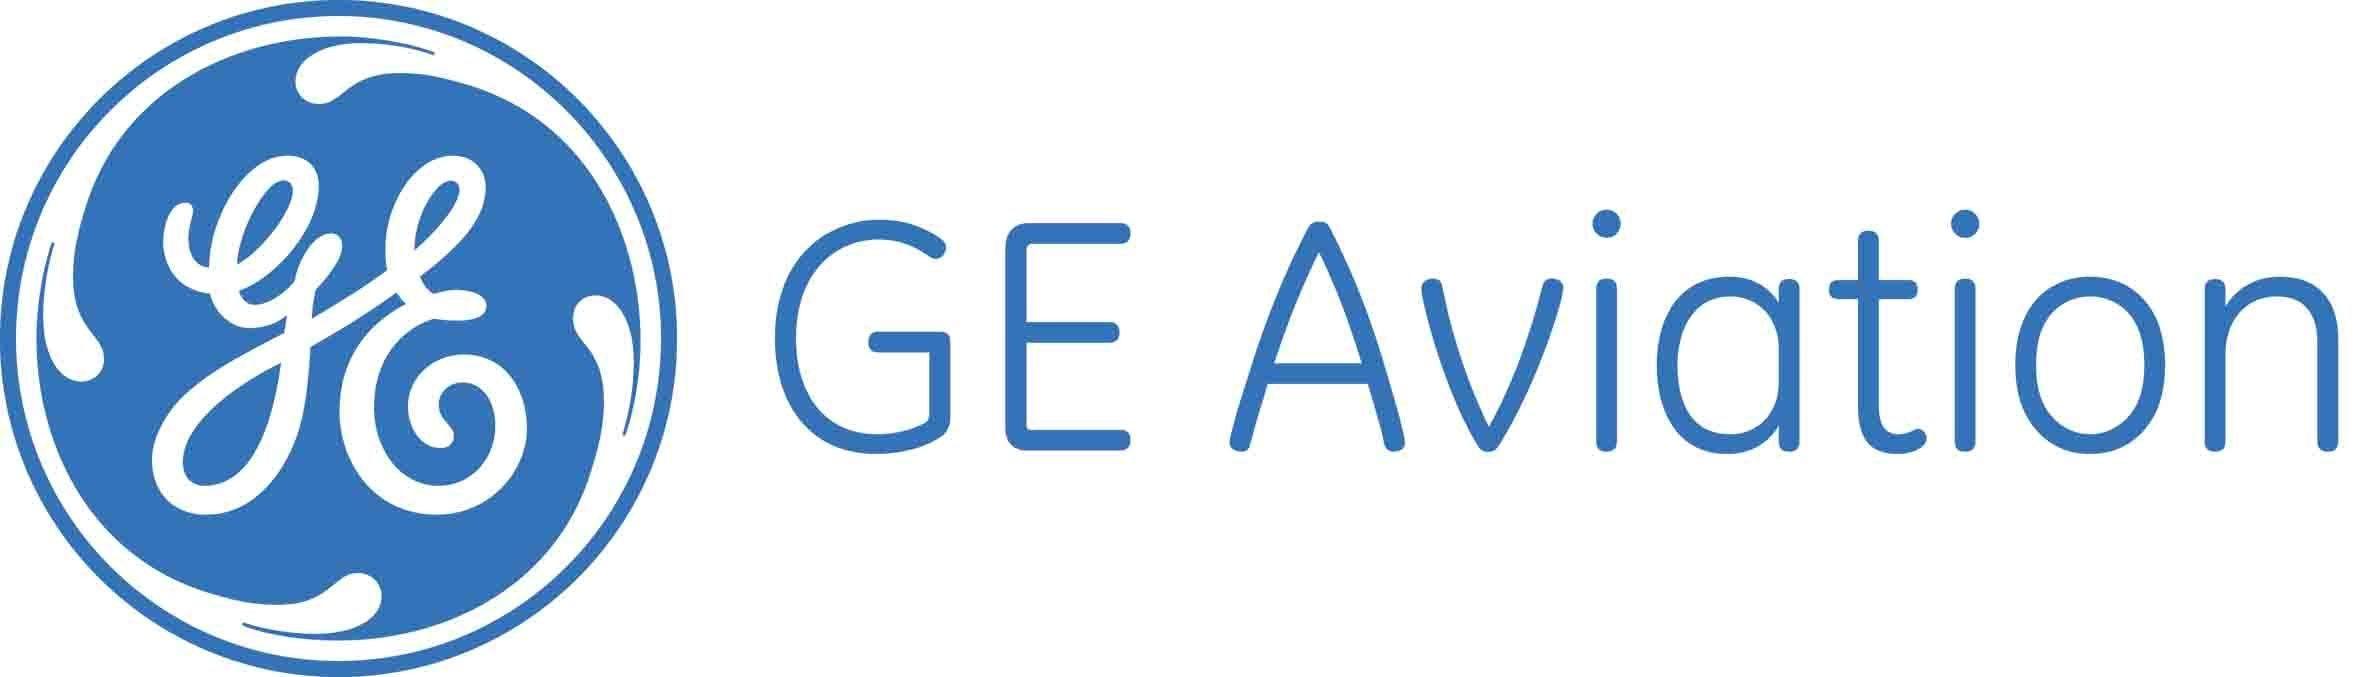 GE Aviation Logo - GE Aviation logo darker blue, Illinois, USA